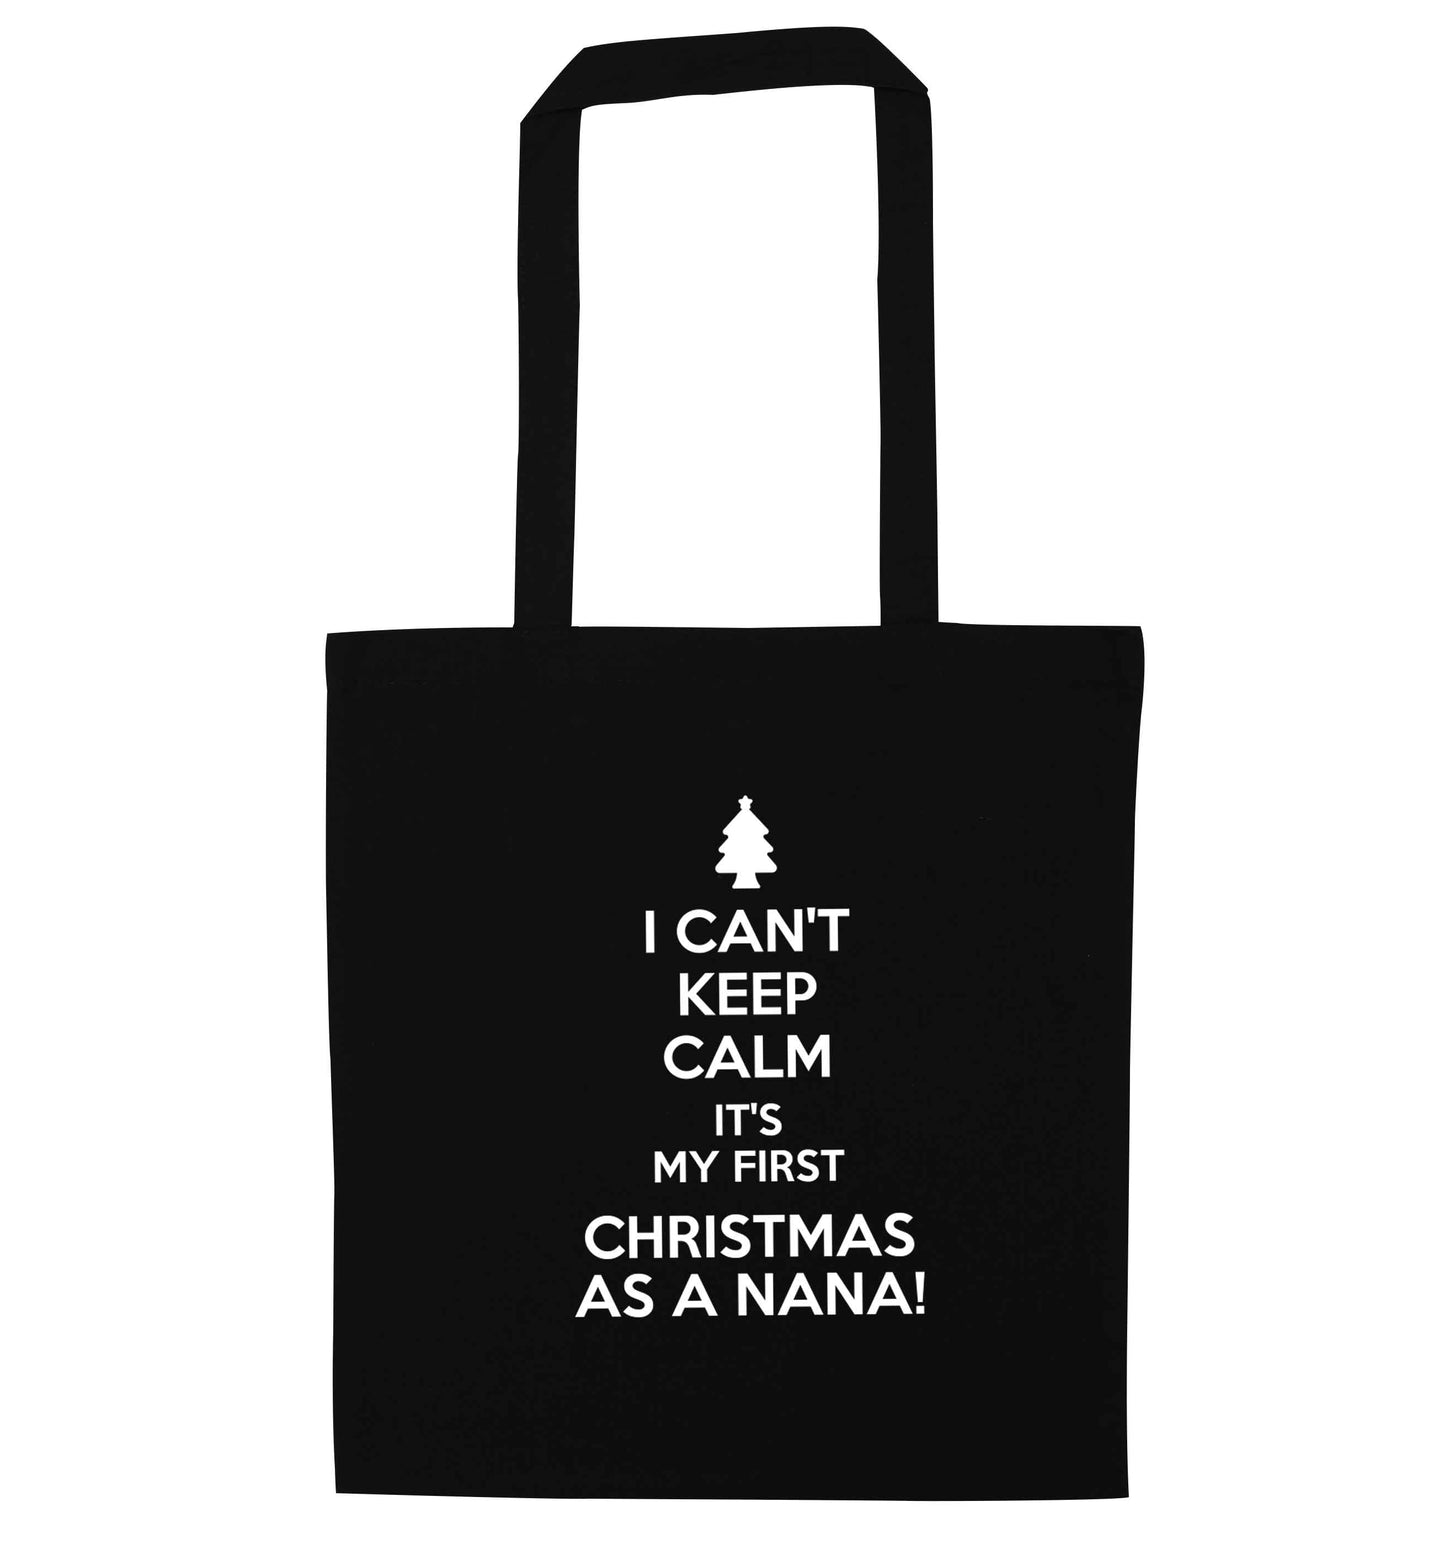 I can't keep calm it's my first Christmas as a nana! black tote bag